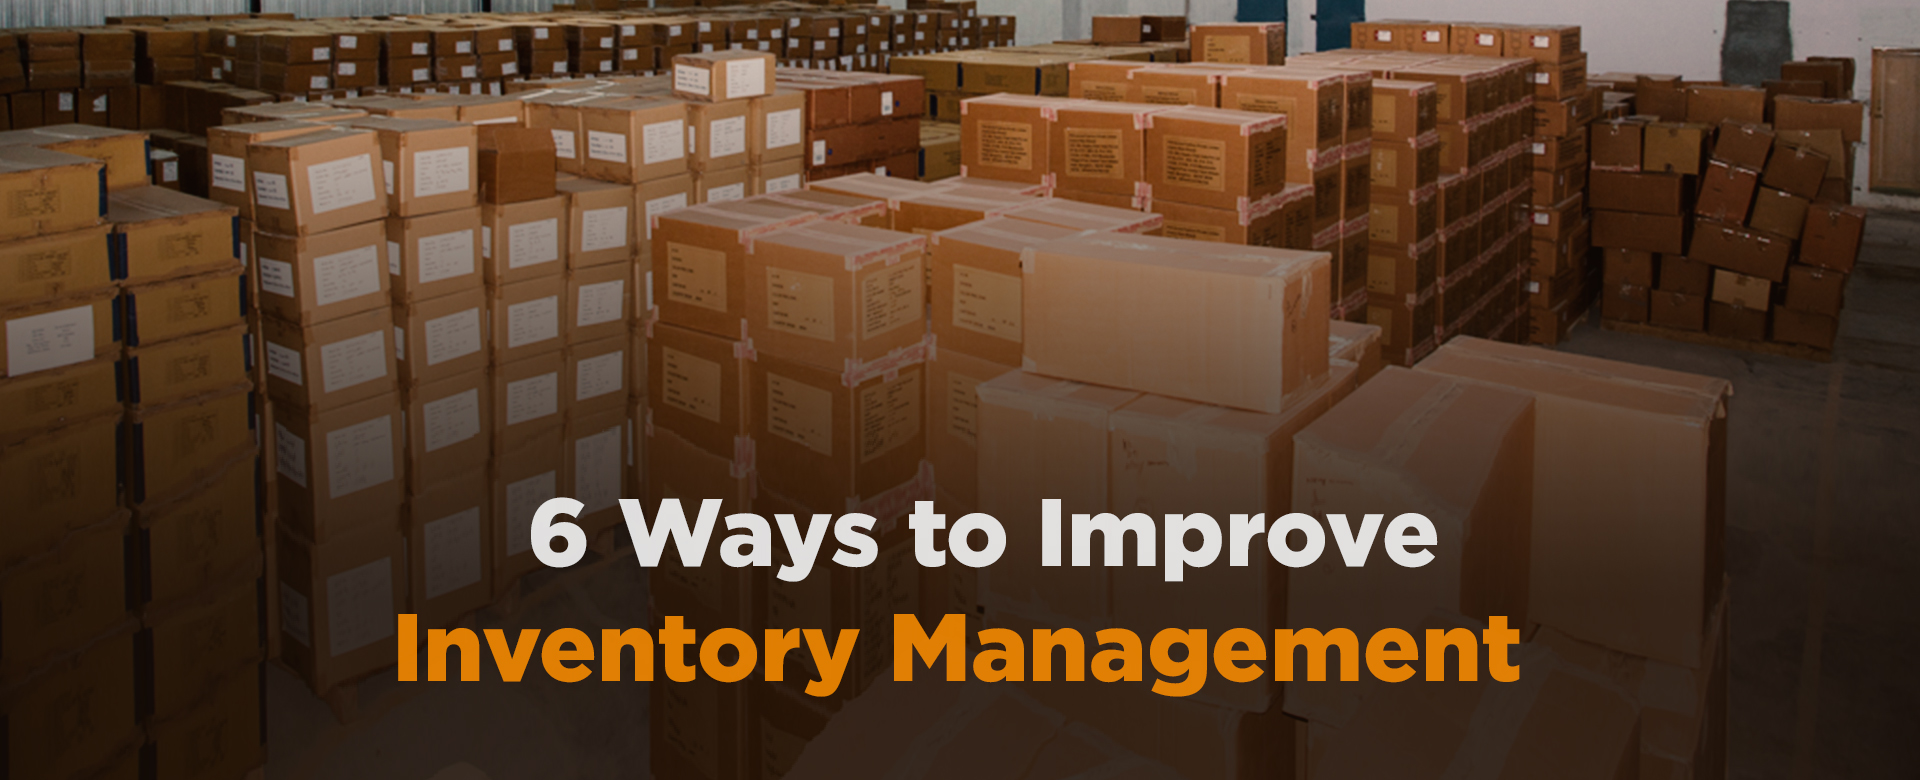  6-ways-to-improve-inventory-management